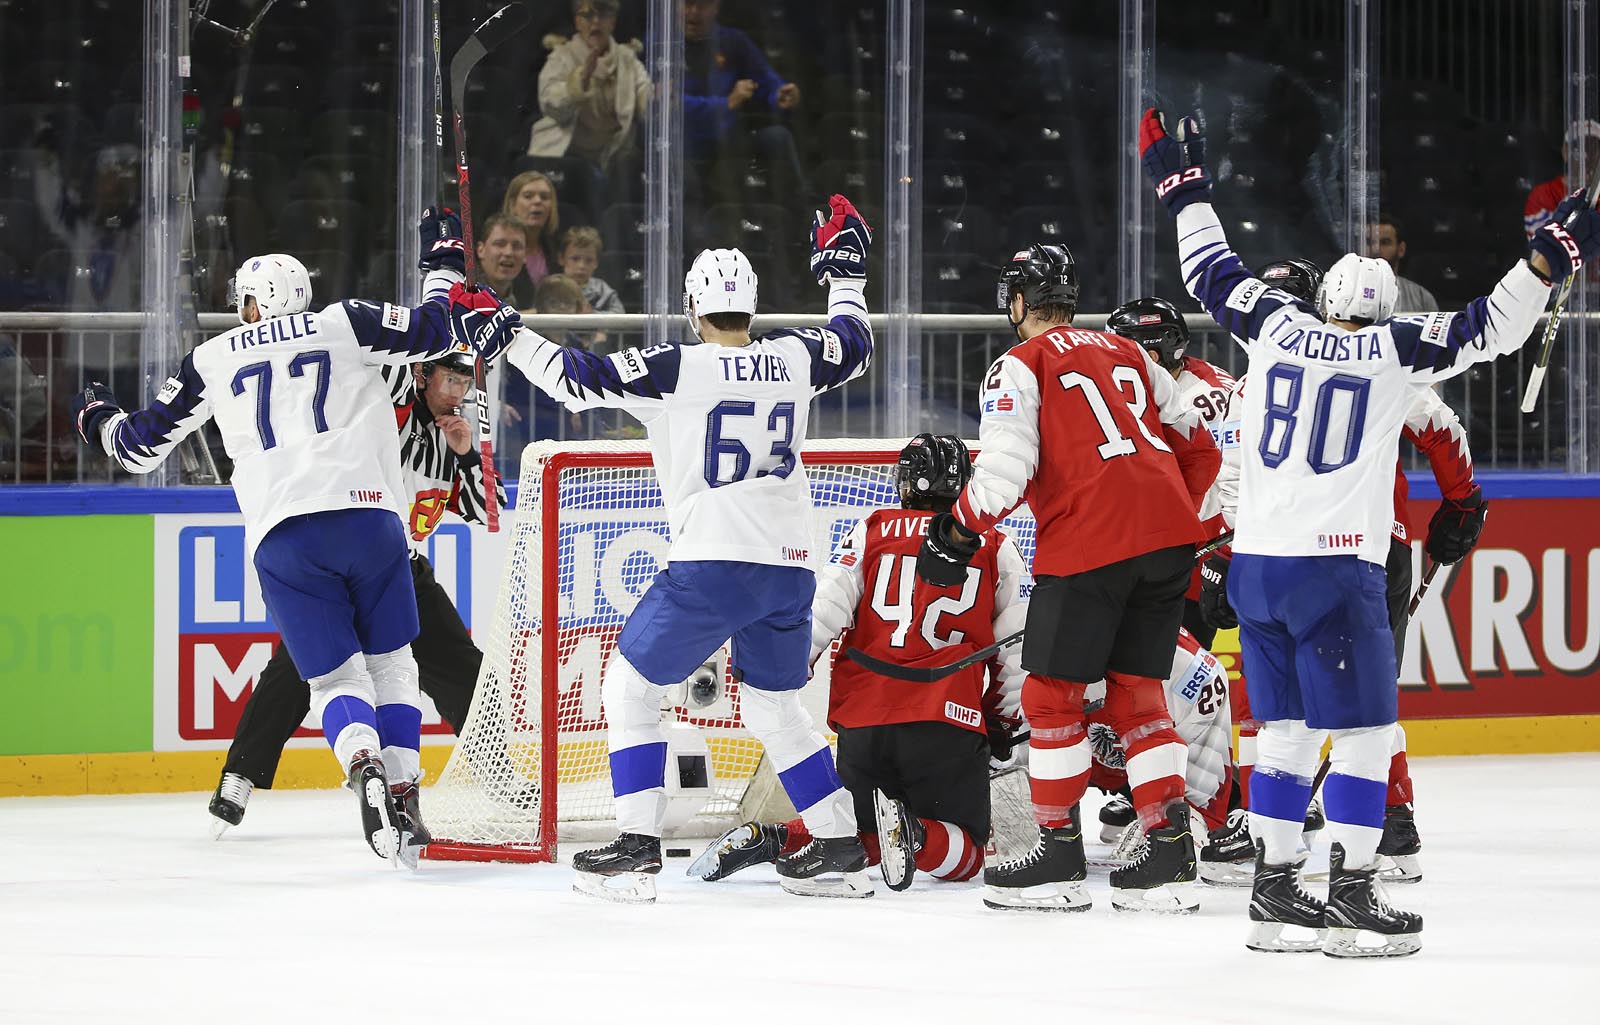 IIHF - Gallery: France vs. Austria